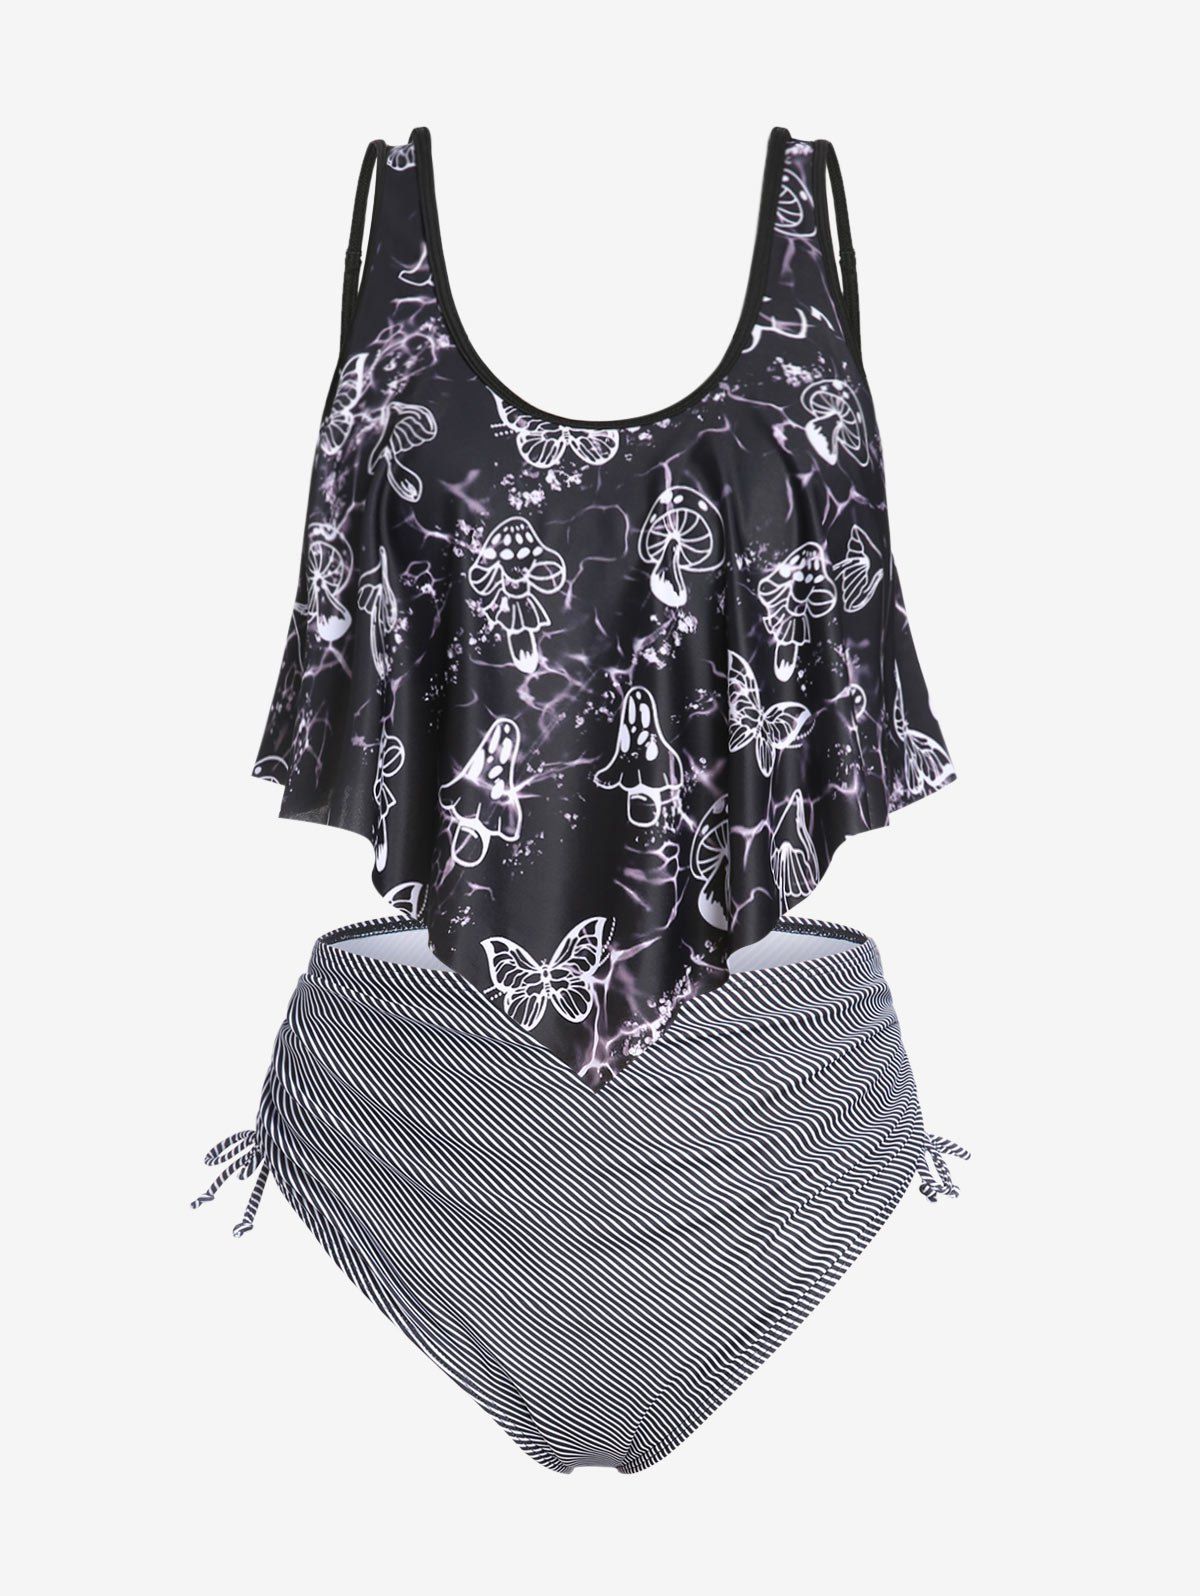 Plus Size & Curve Mushroom Print Ruffled Overlay Striped Cinched Tankini Swimsuit - BLACK 2X